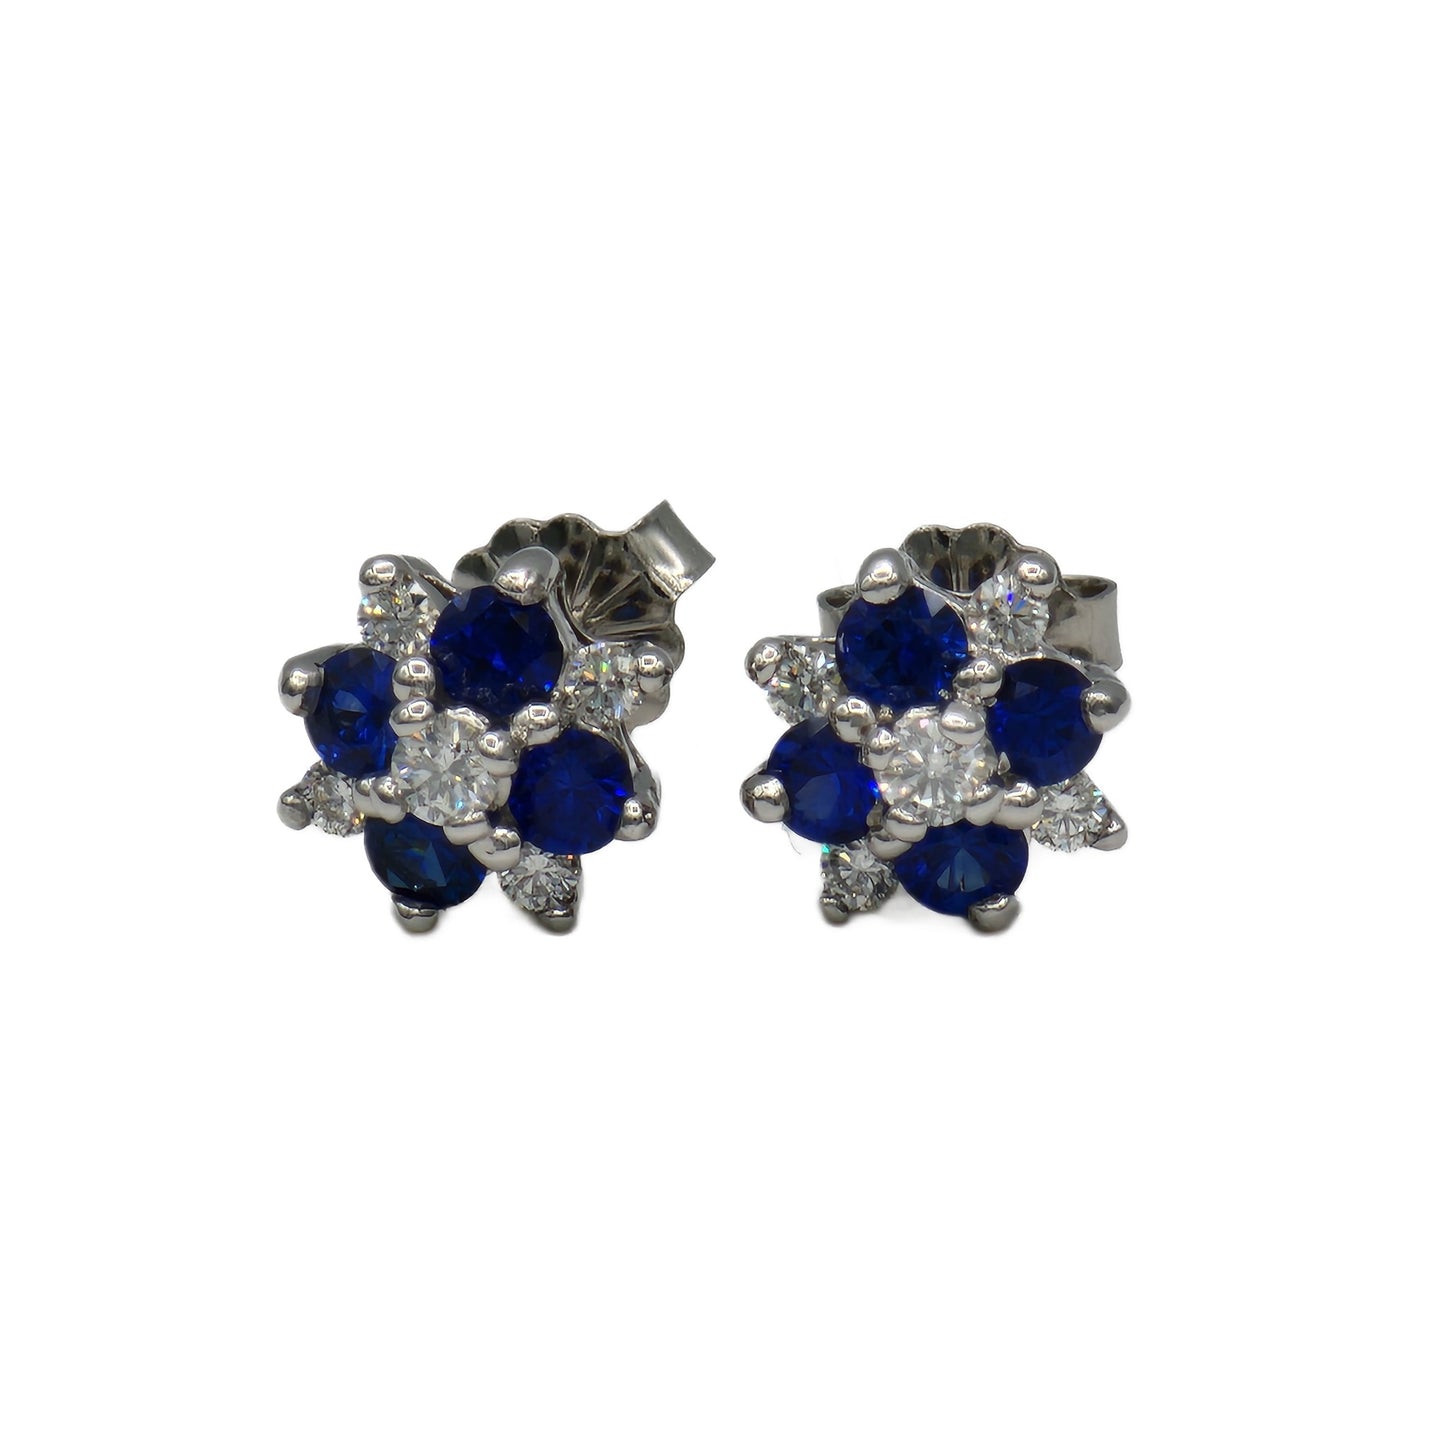 Blue Sapphire and Diamond Cluster Stud Earrings in 14K